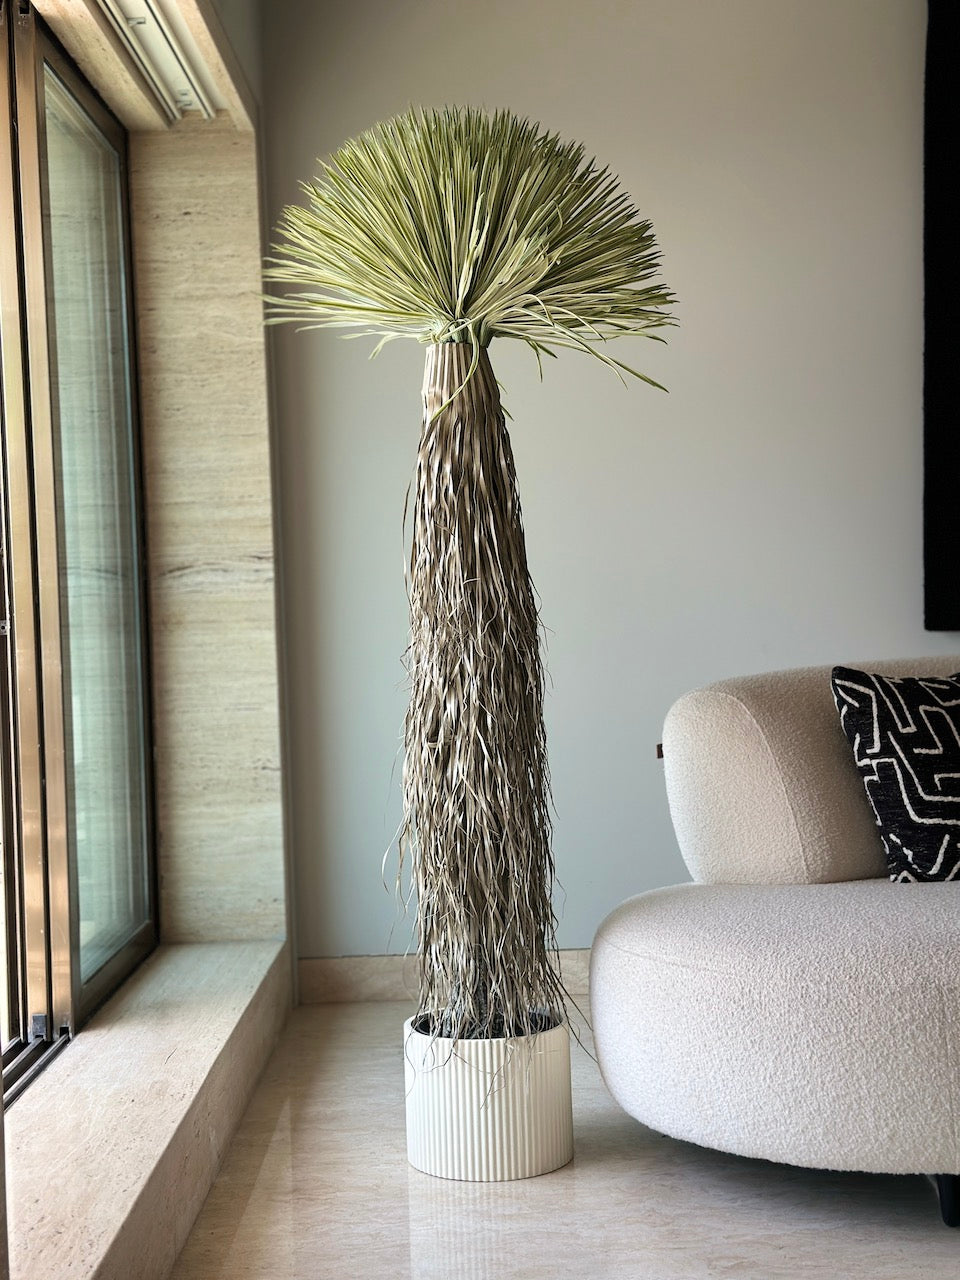 Desert Palm Tree - 5.5 Feet